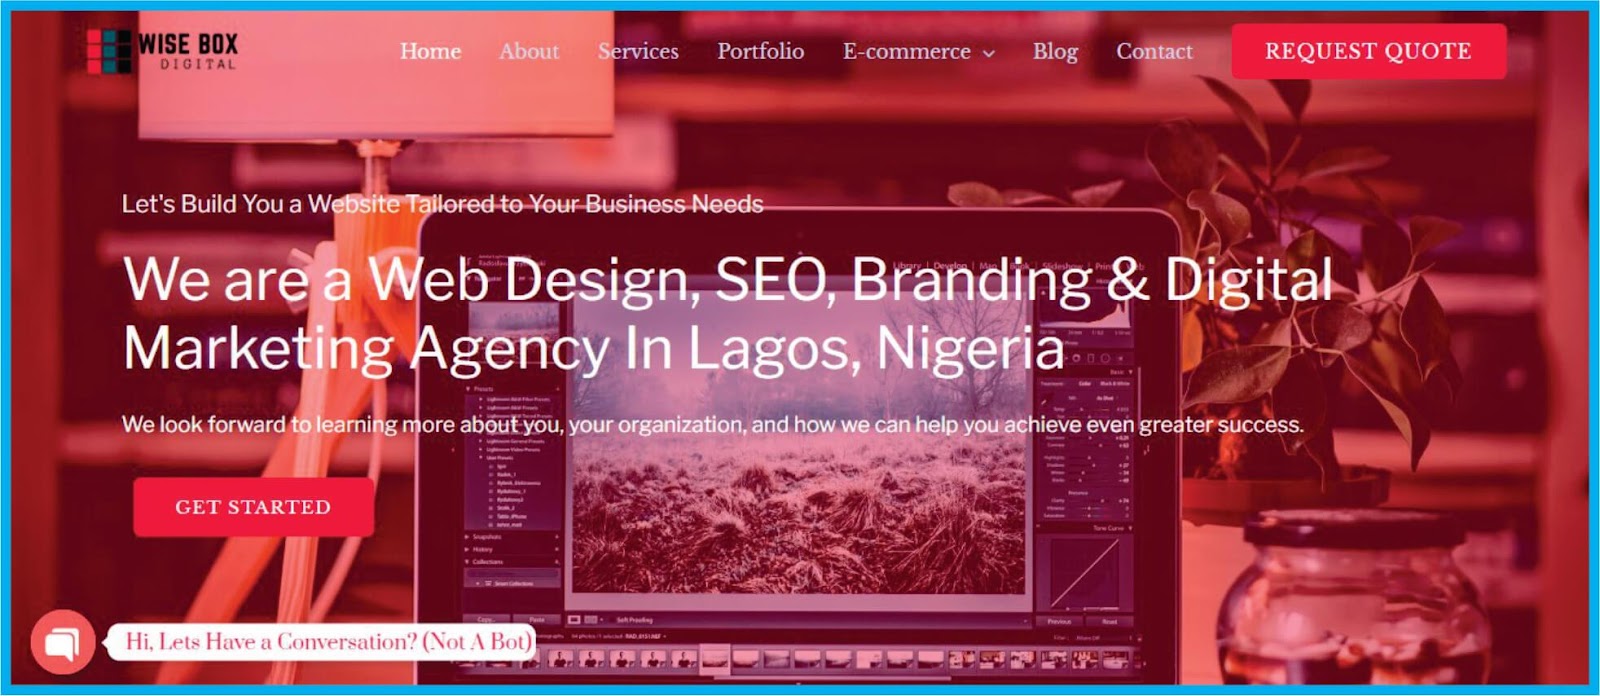 Wise Box web design company Lagos